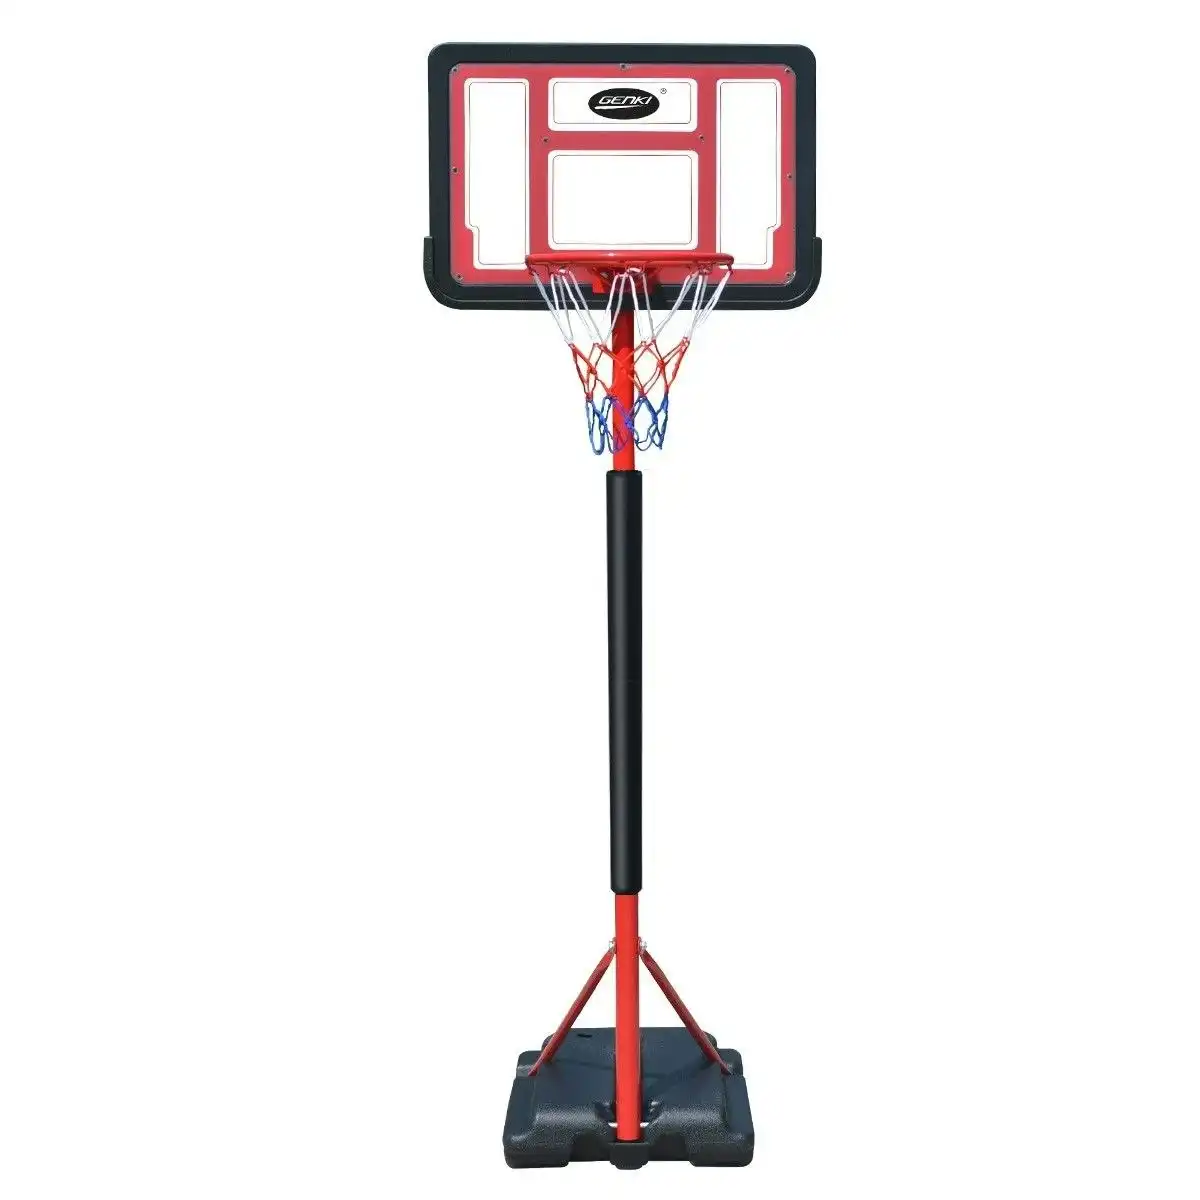 Ausway Genki 1.05 1.65m Kid Portable Basketball Hoop Stand Backboard Net Ring Ball Set